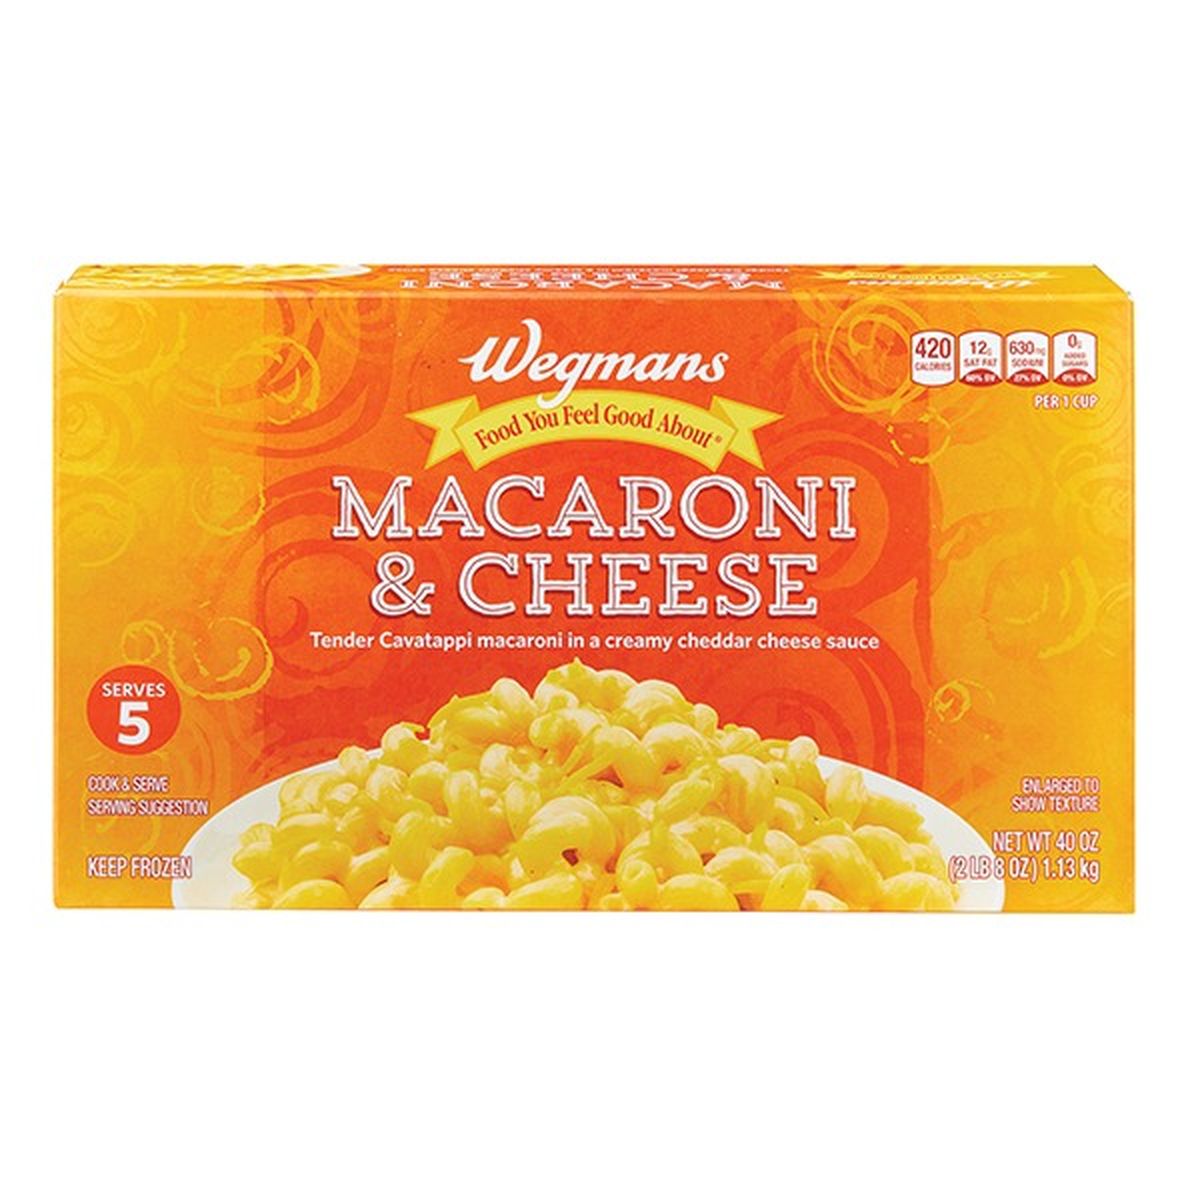 Calories in Wegmans Macaroni & Cheese